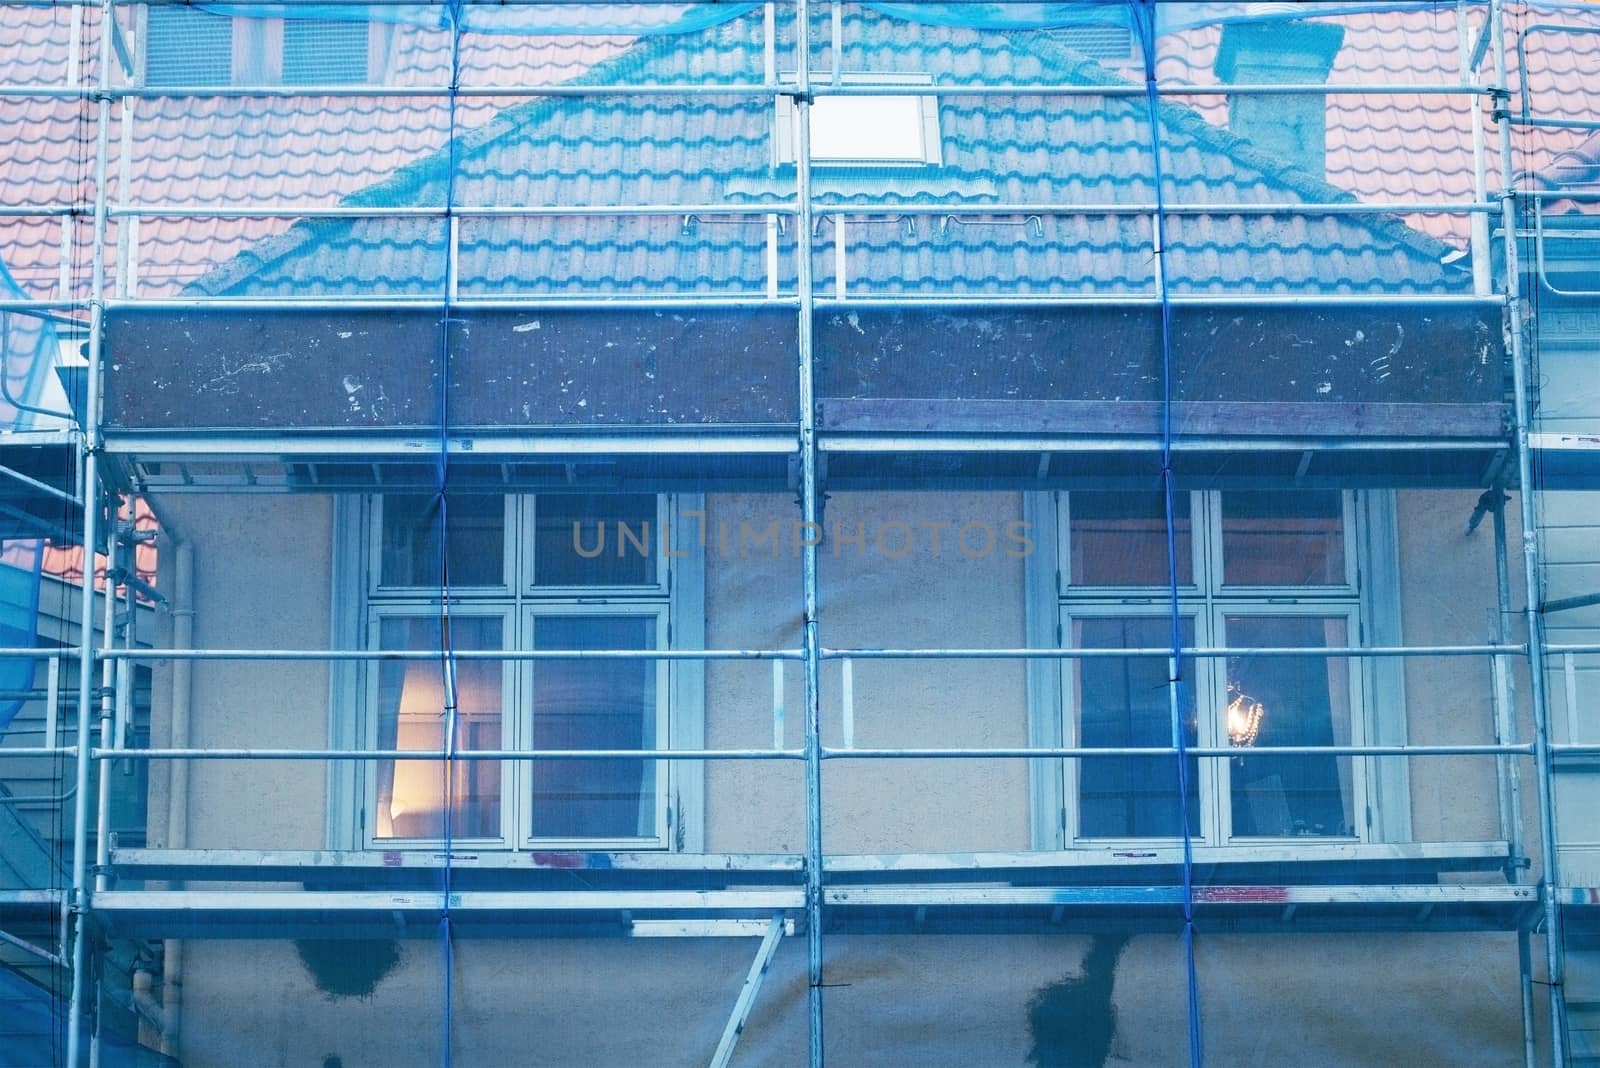 restoration facade of old house under blue net